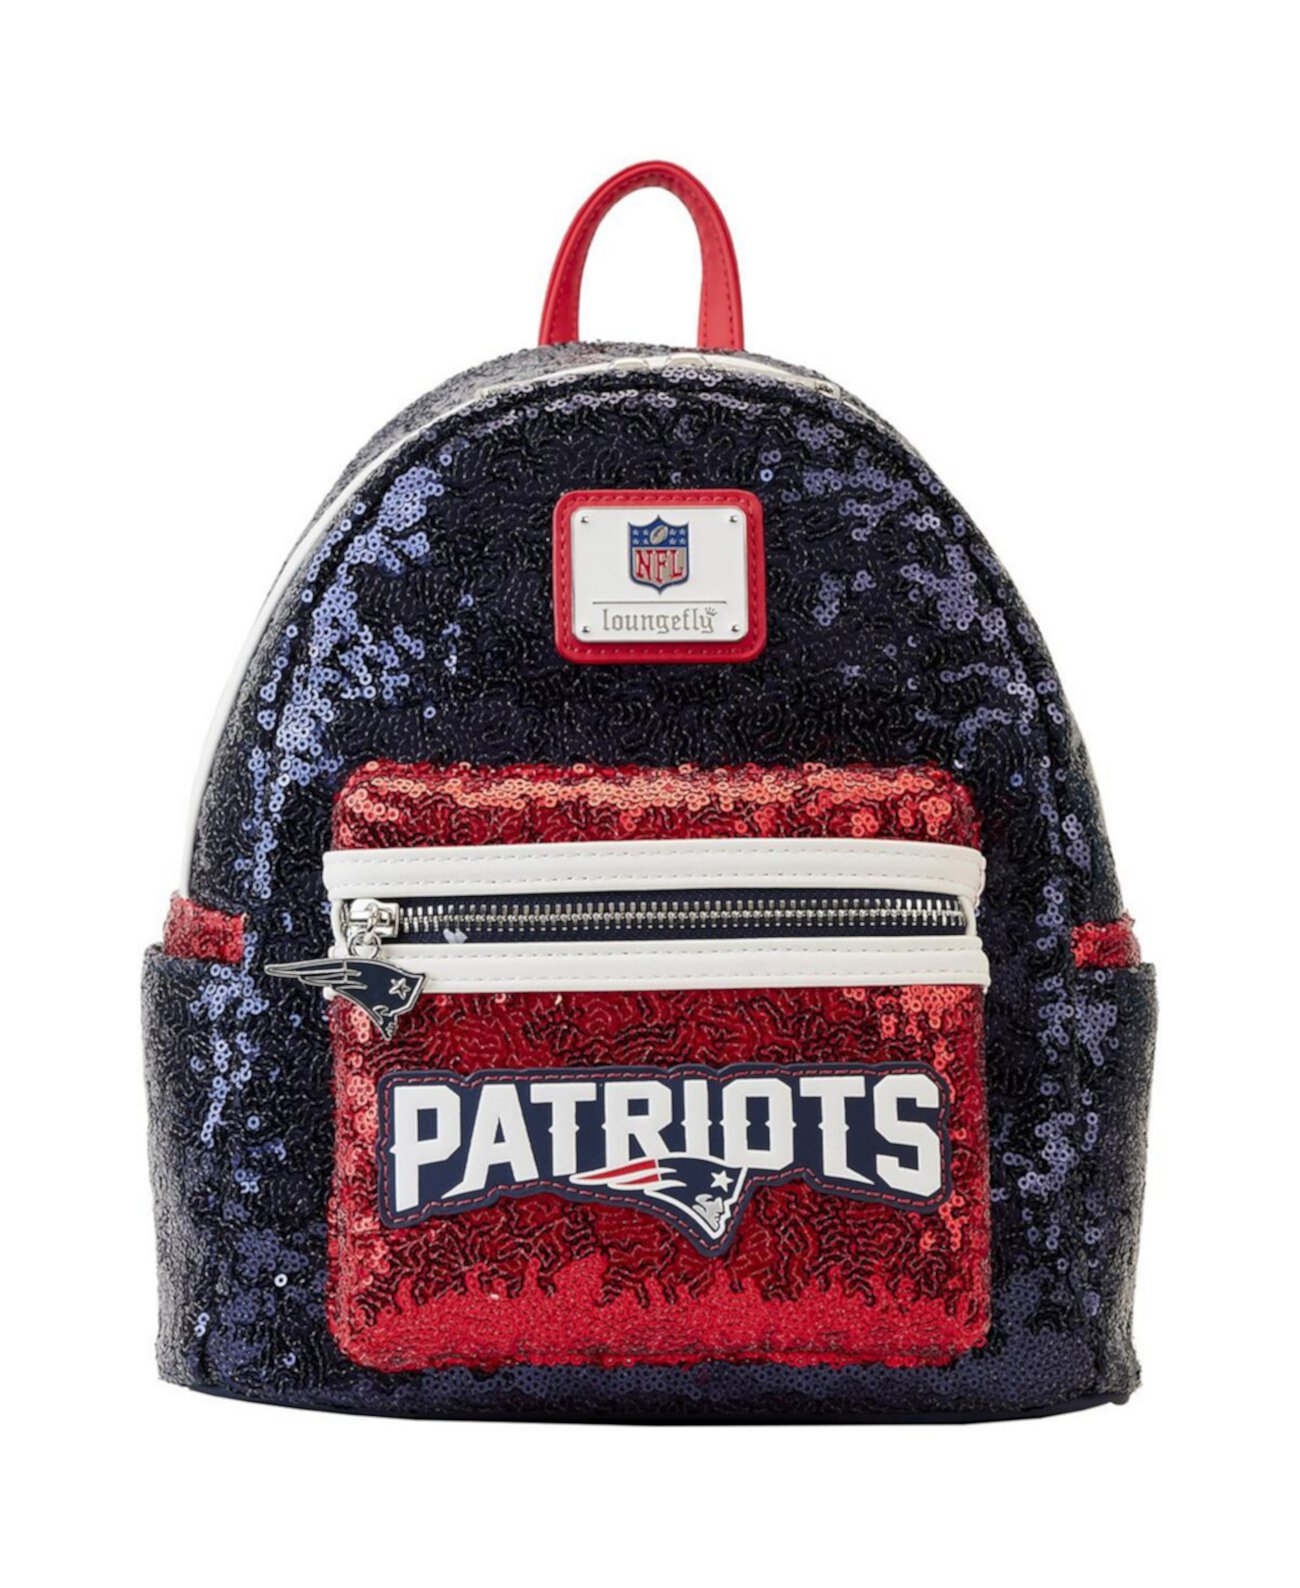 Мужской и женский мини-рюкзак New England Patriots с пайетками Loungefly